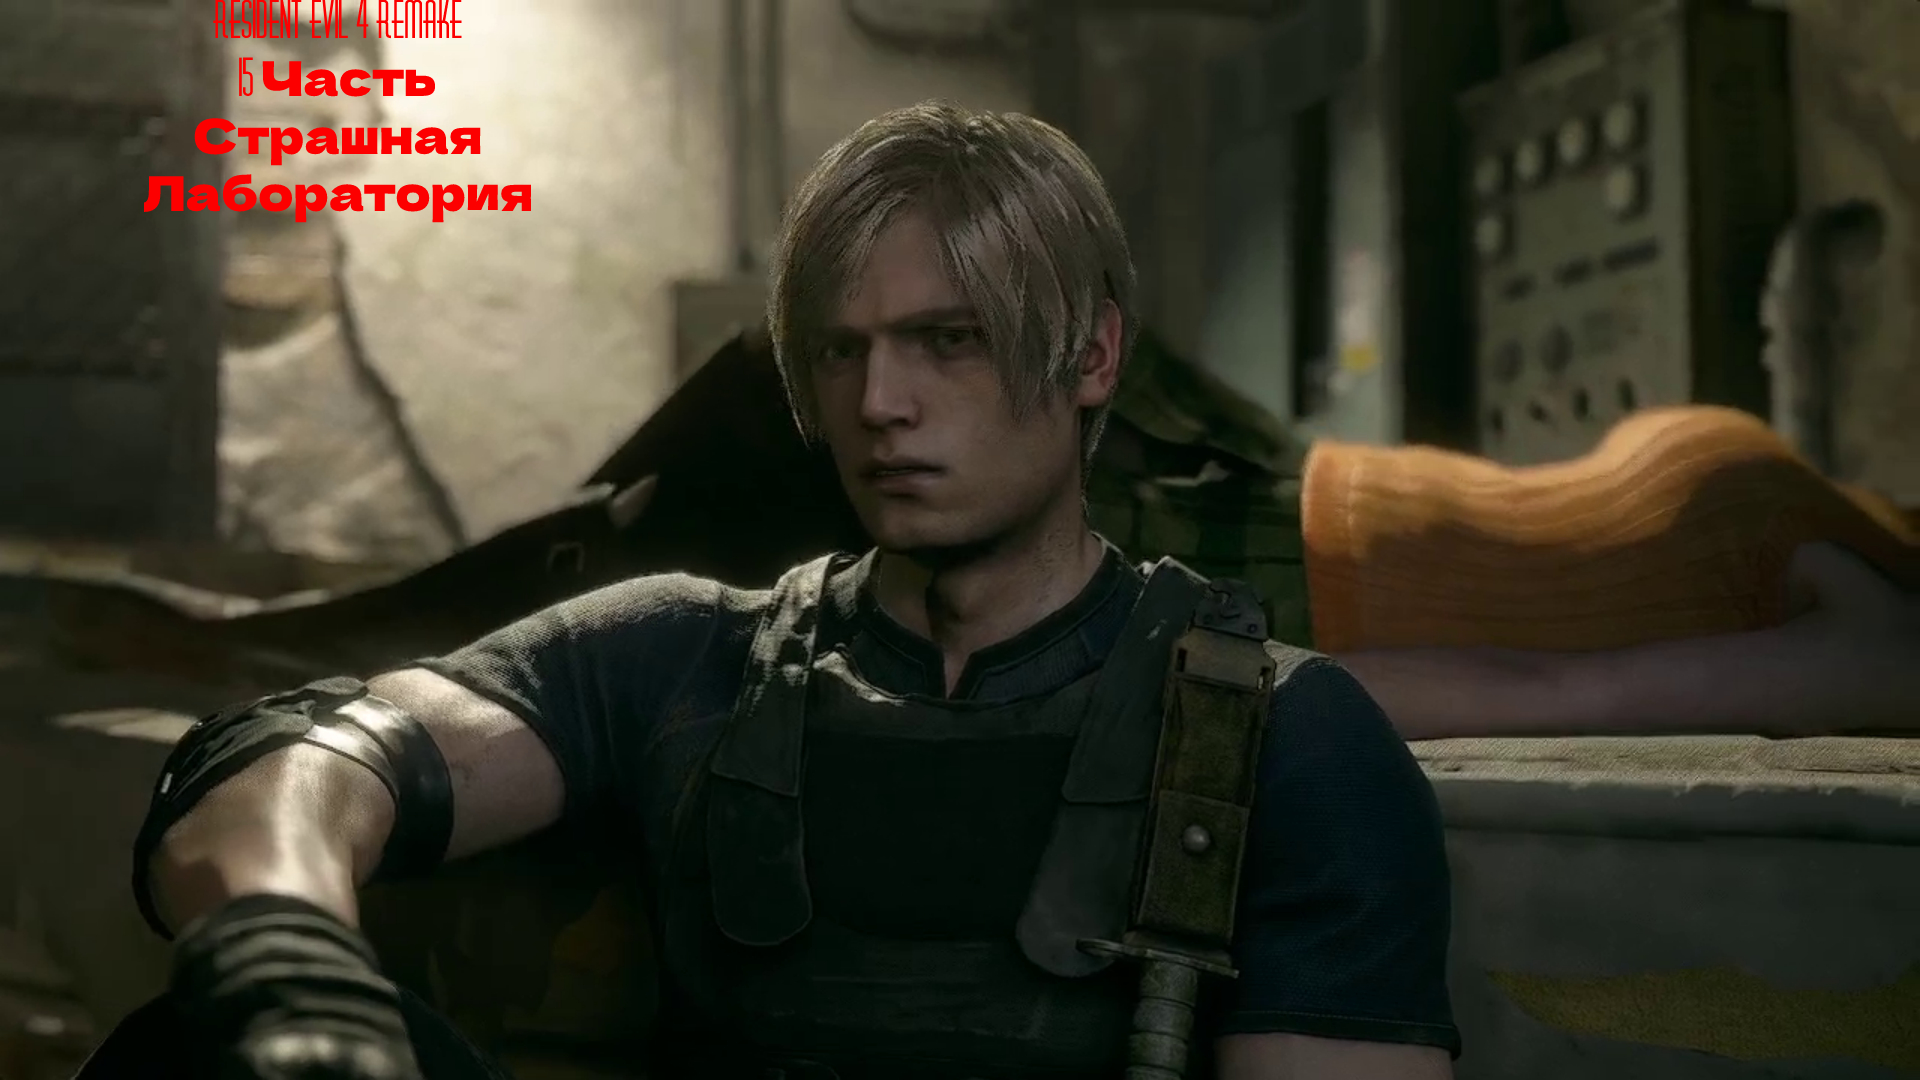 Resident Evil 4 Remake - 15 Часть
Страшная Лаборатория!!